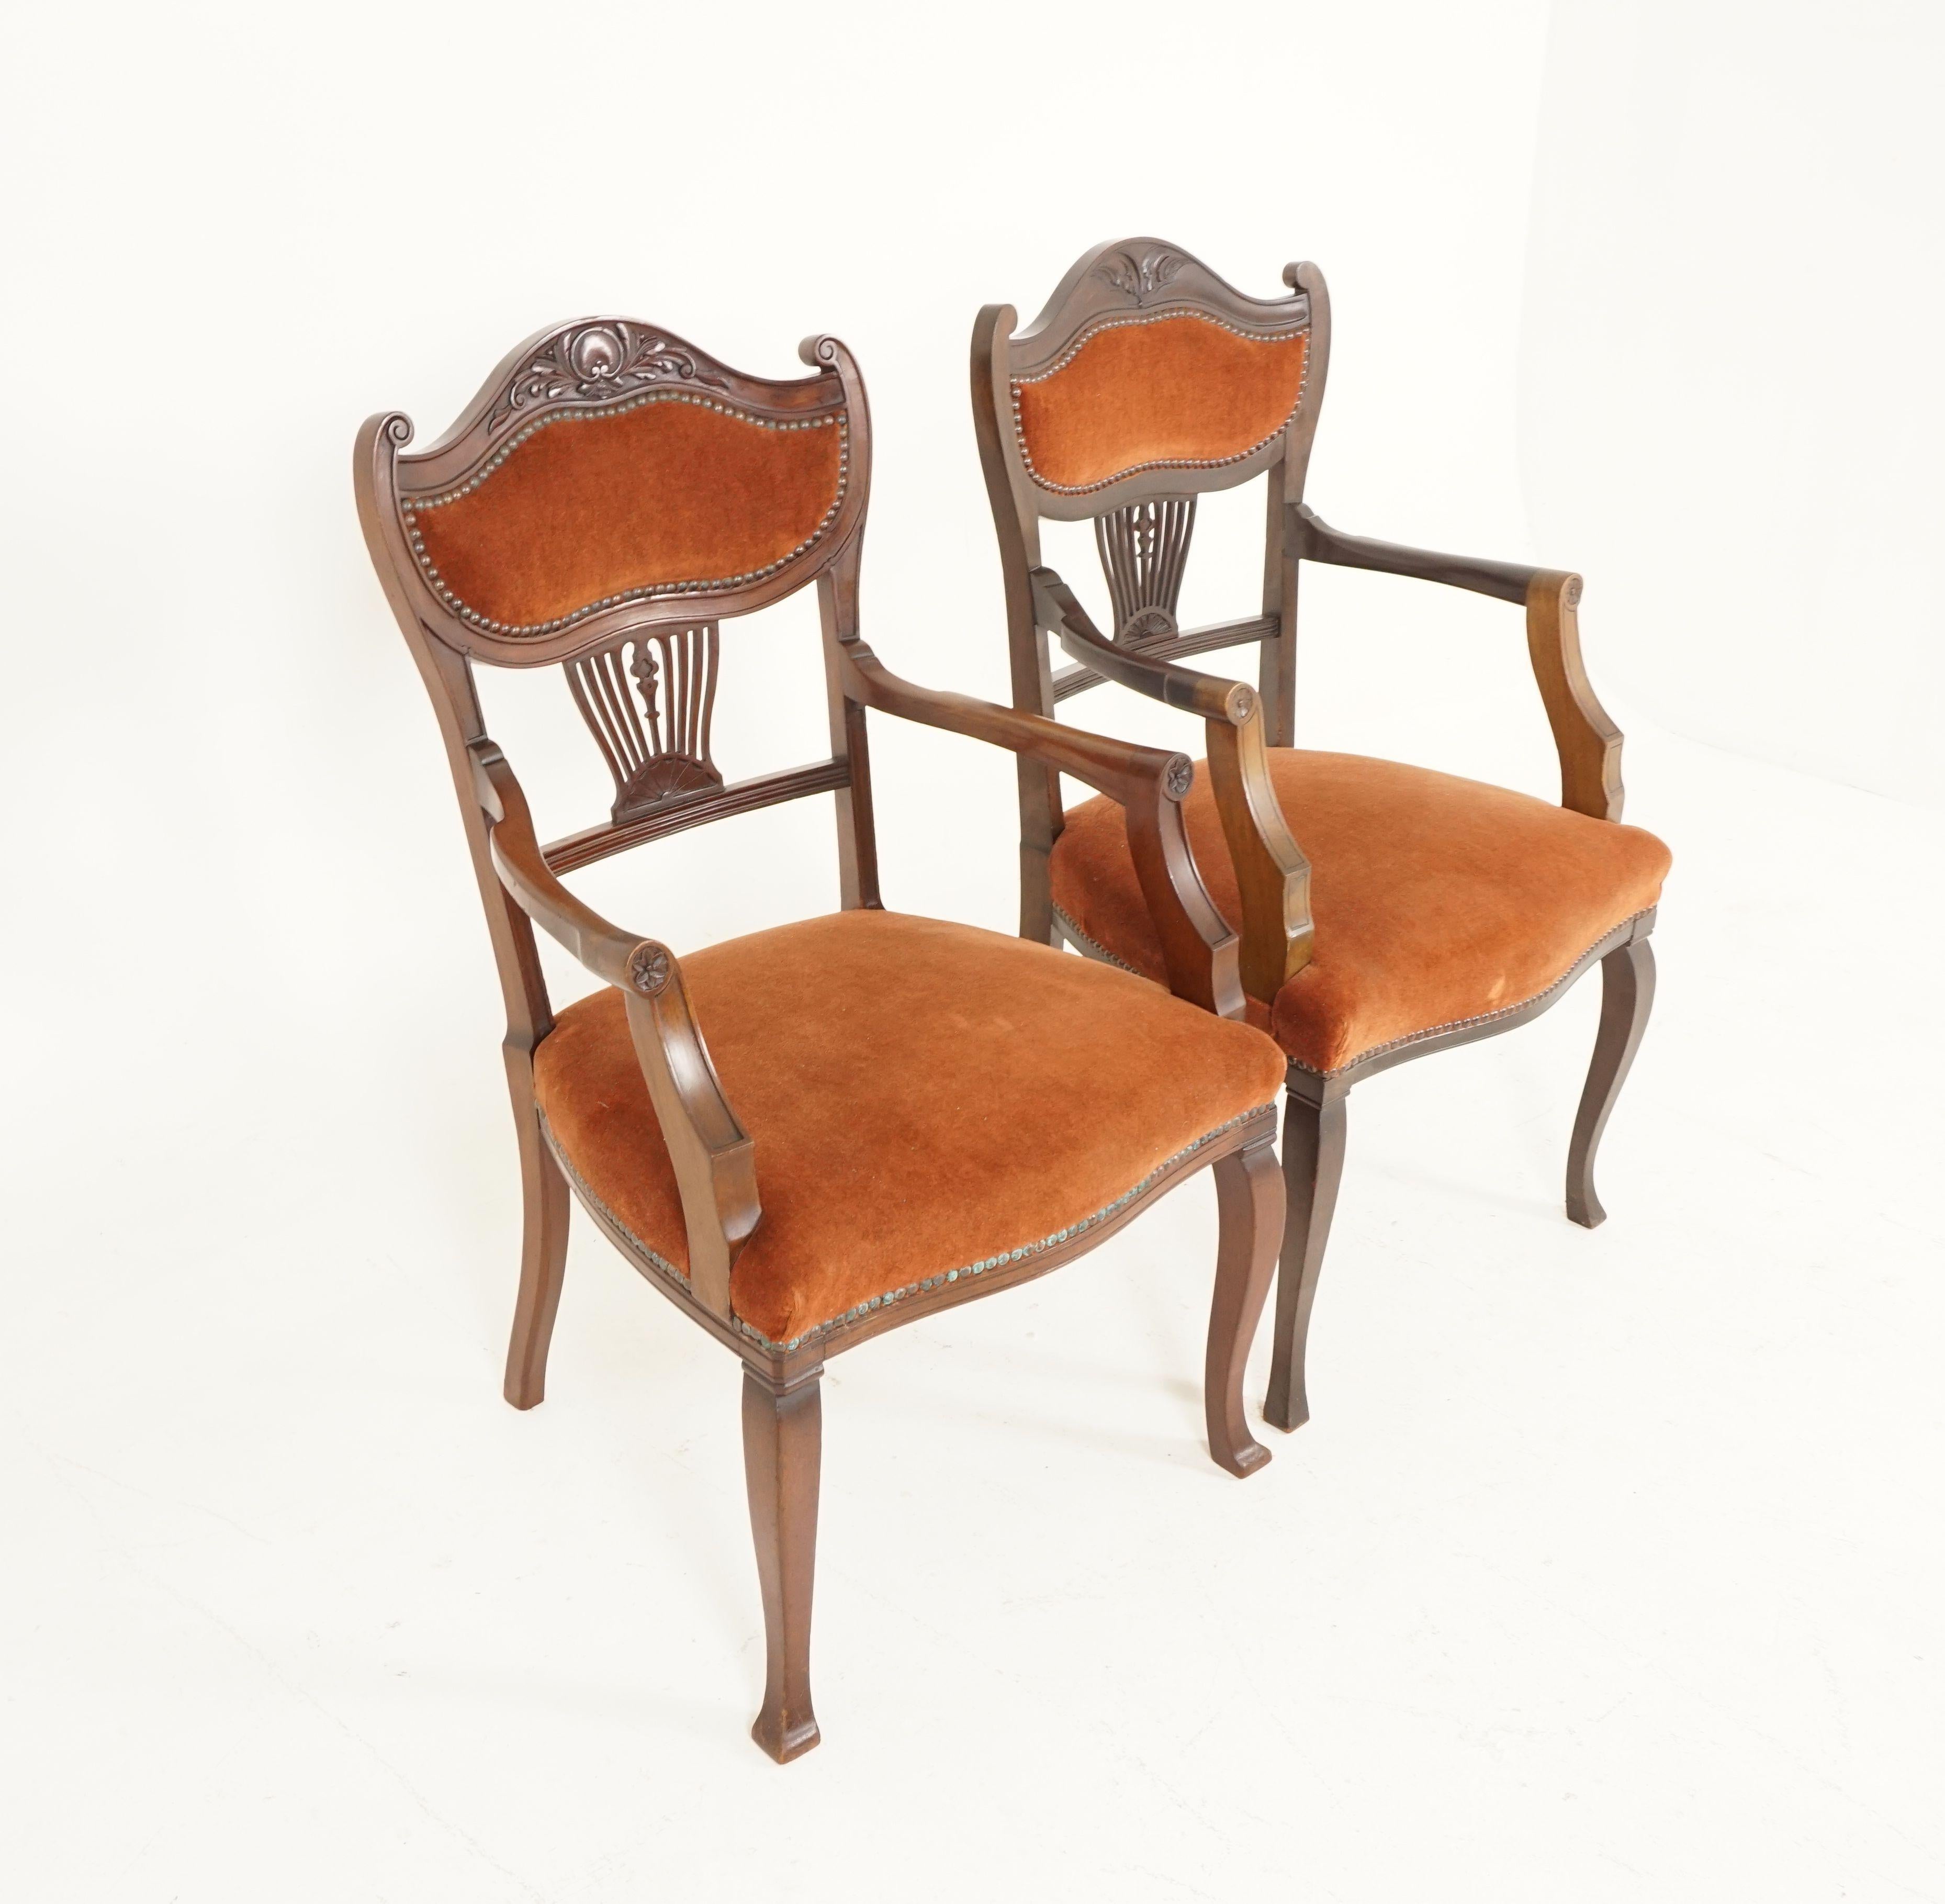 Scottish Antique Walnut Arm Chairs, Edwardian, Art Nouveau, Upholstered Seat, B2344